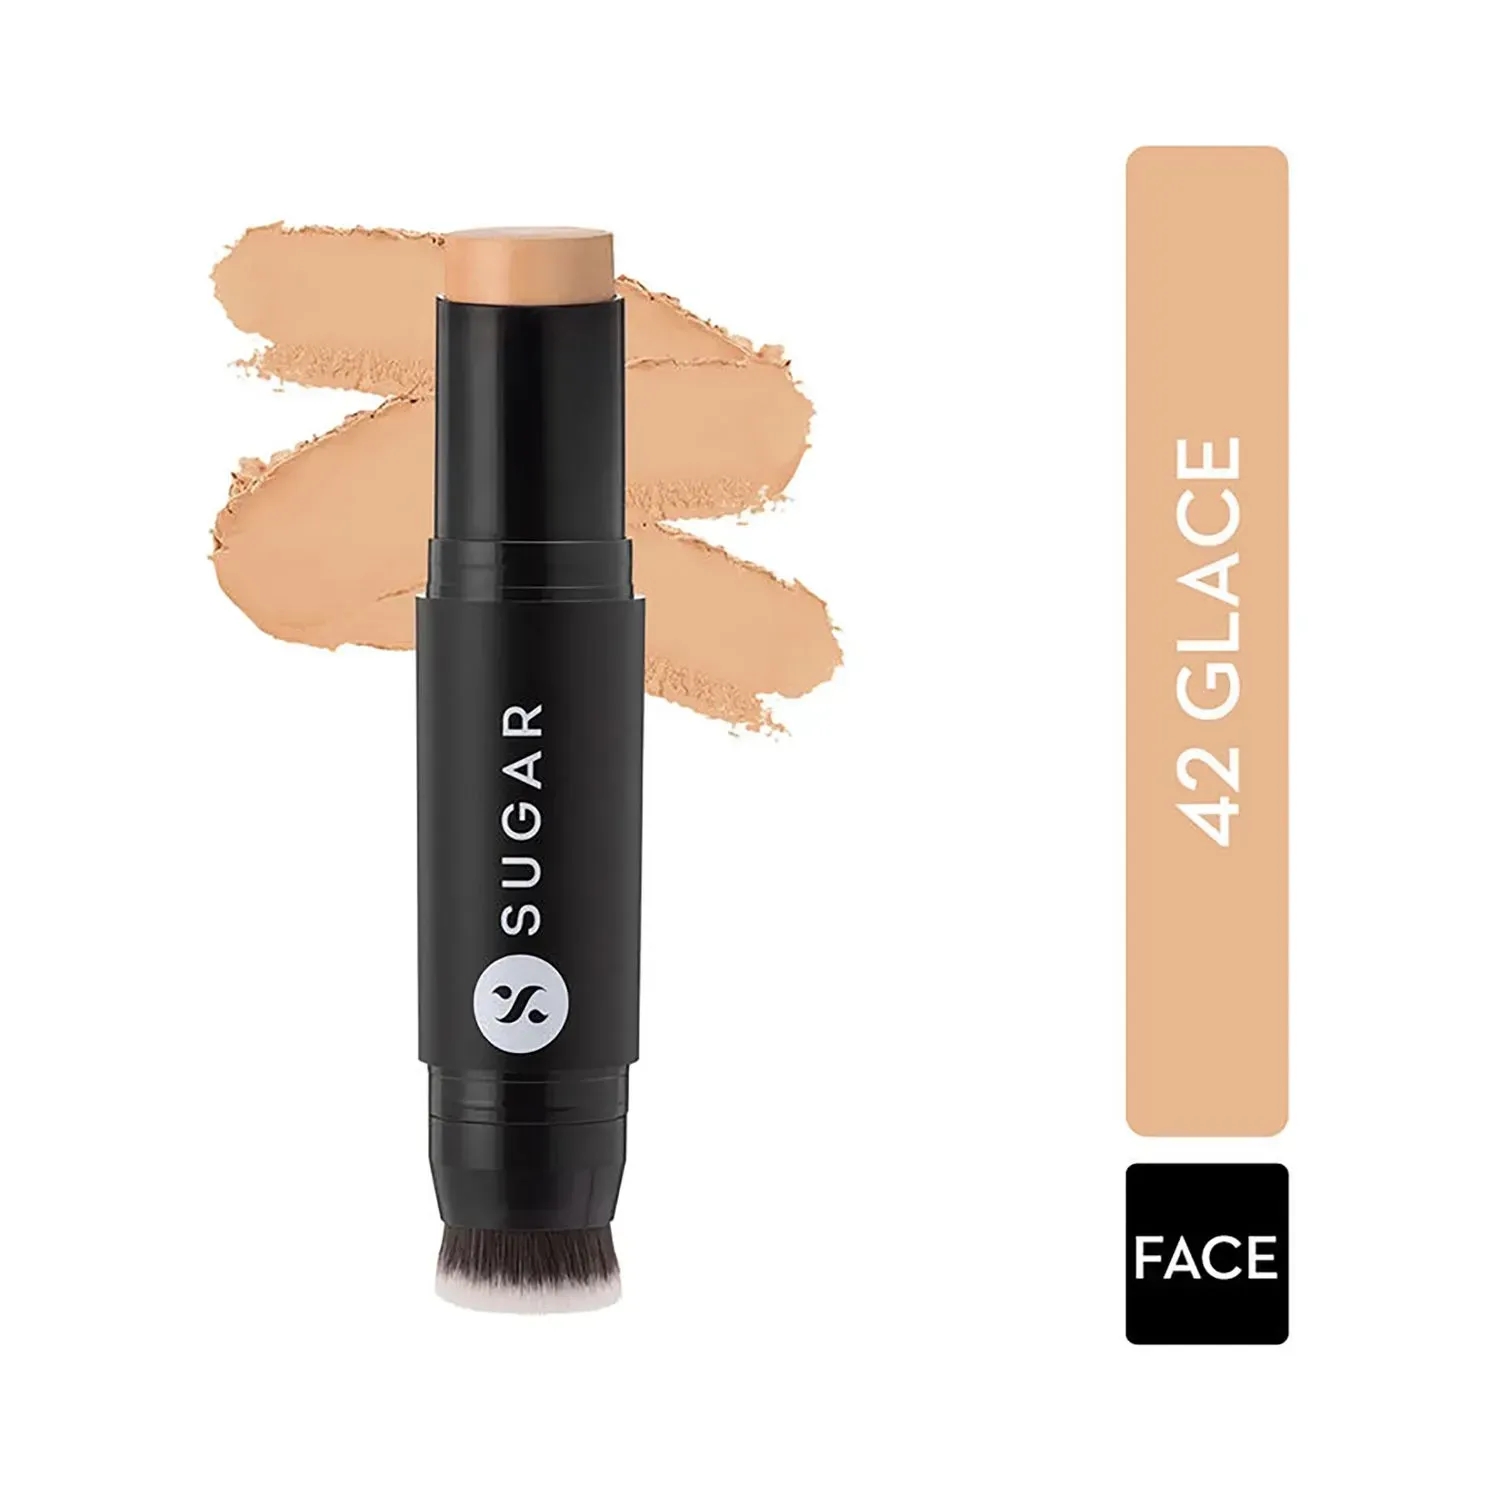 SUGAR Cosmetics | SUGAR Cosmetics Ace Of Face Foundation Stick With Inbuilt Brush - 42 Glace (Medium Beige, Golden Undertone) (12g)